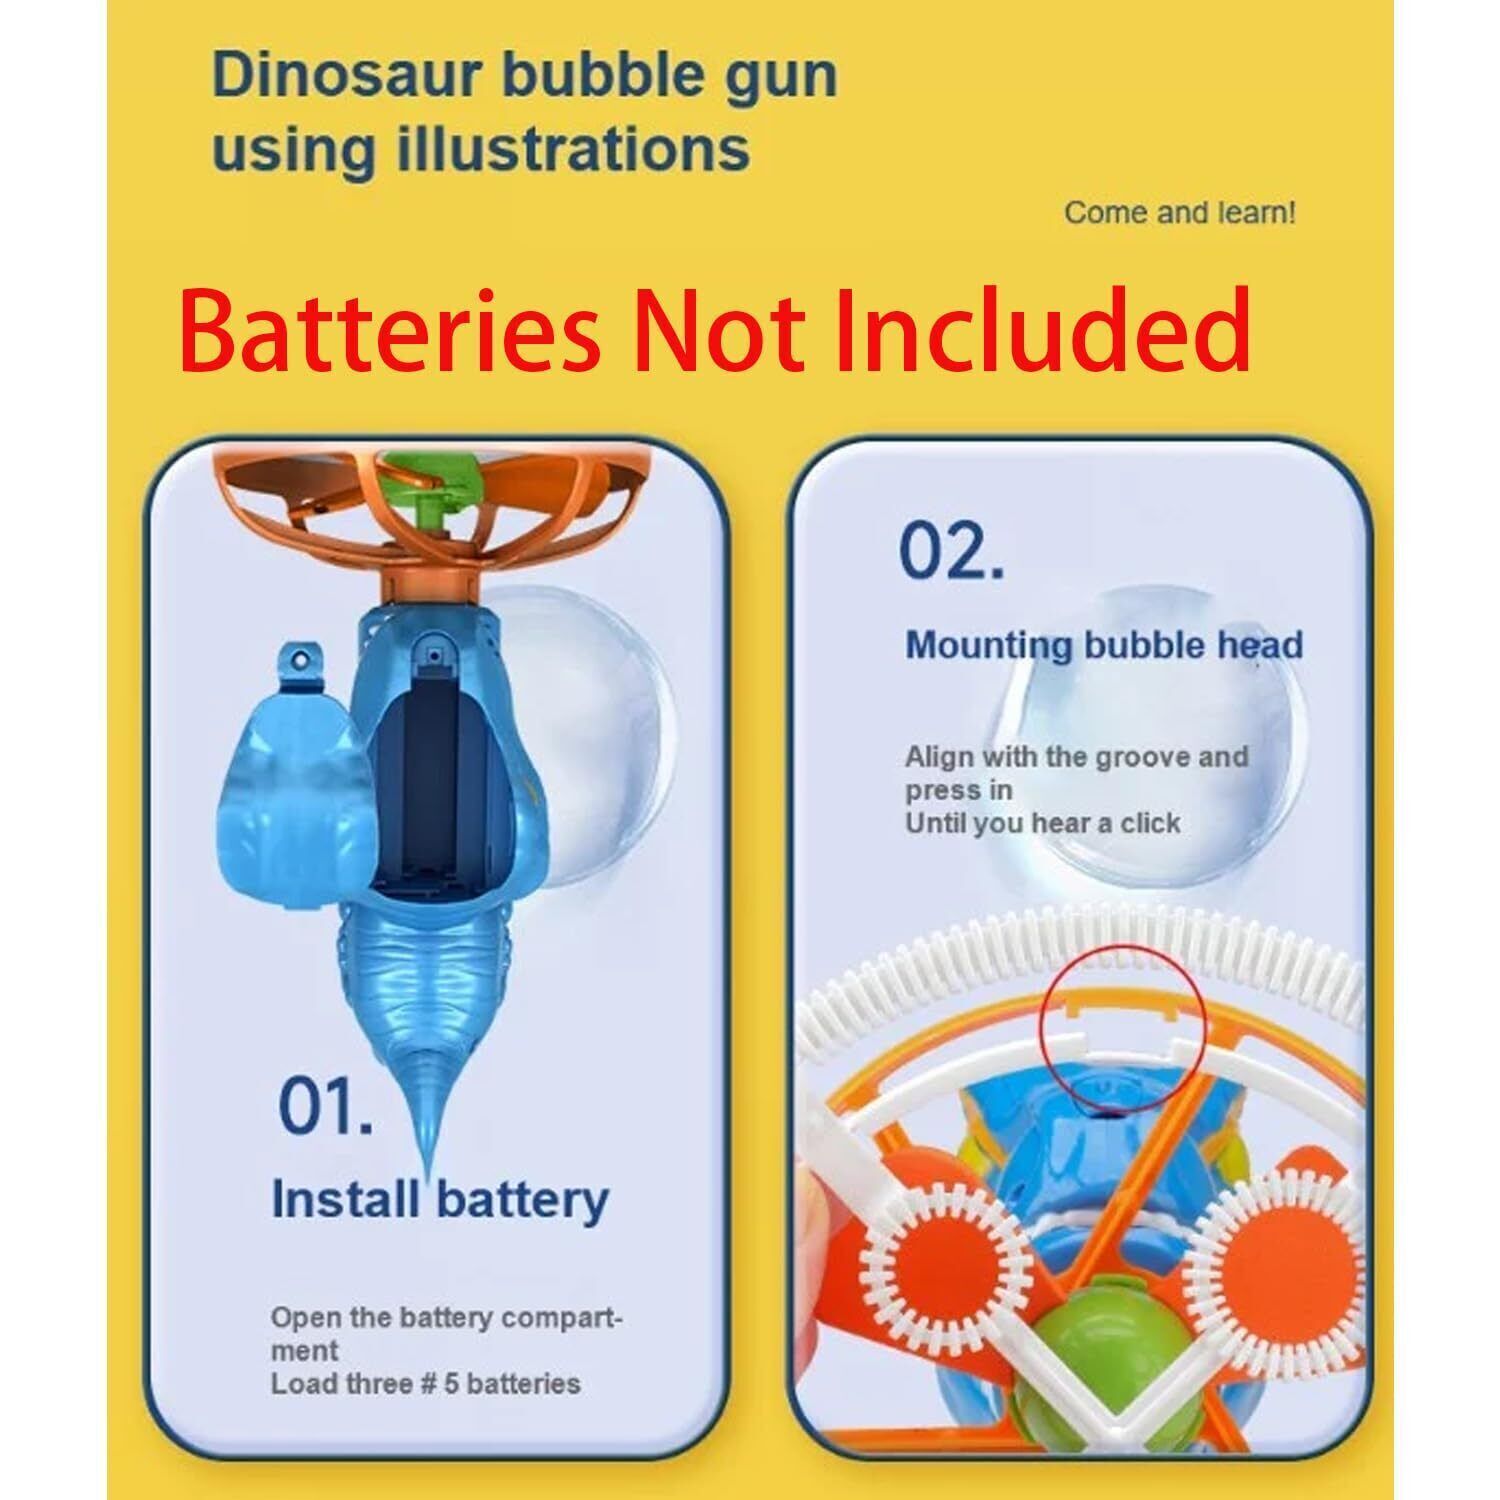 Green gift Bubble Gun Automatic Bazooka Soap Water Bubble Machine Toy Electric Fan kid